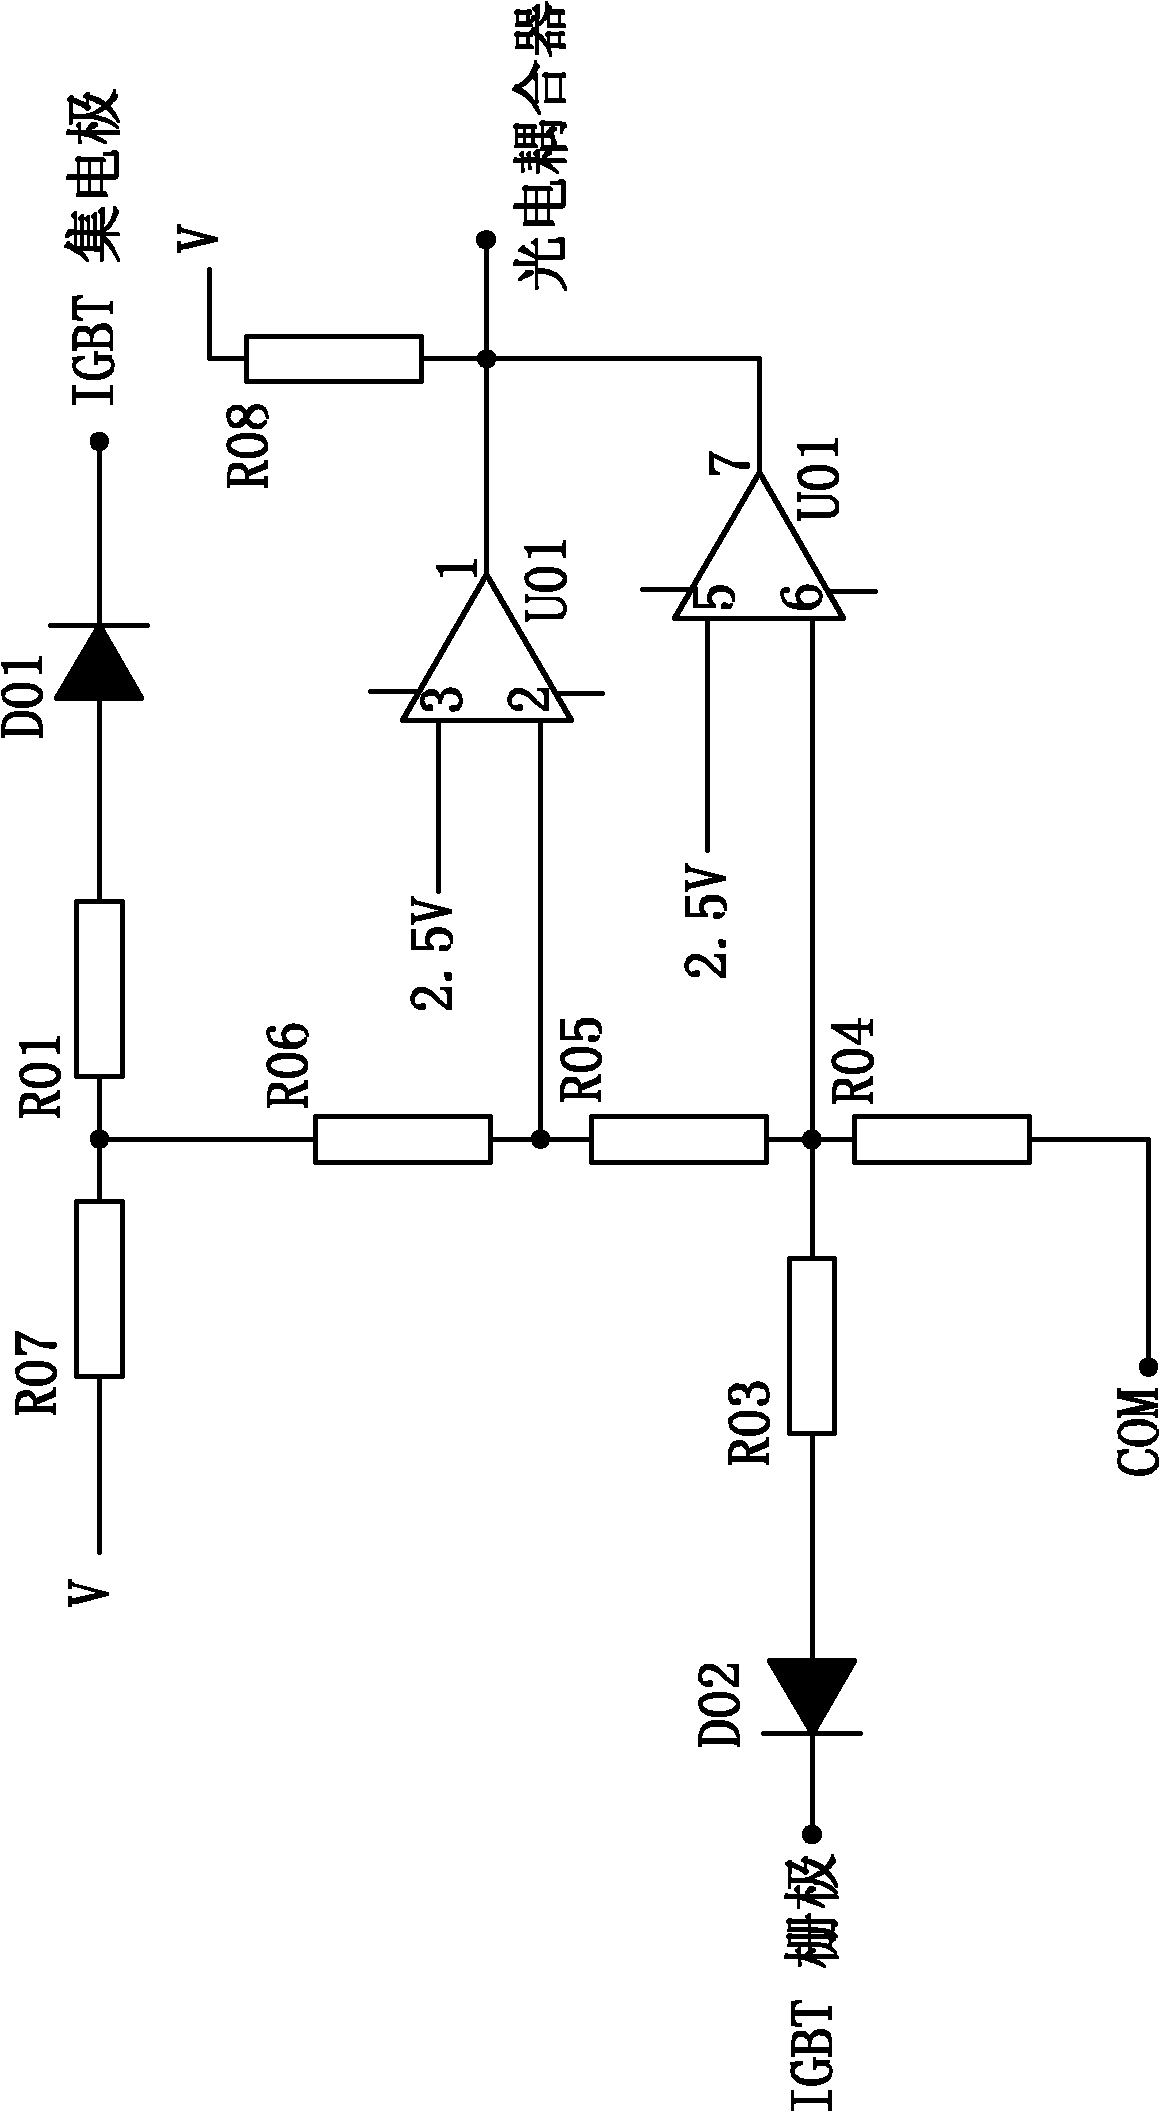 Insulated gate bipolar transistor (IGBT) short circuit protection circuit and control method